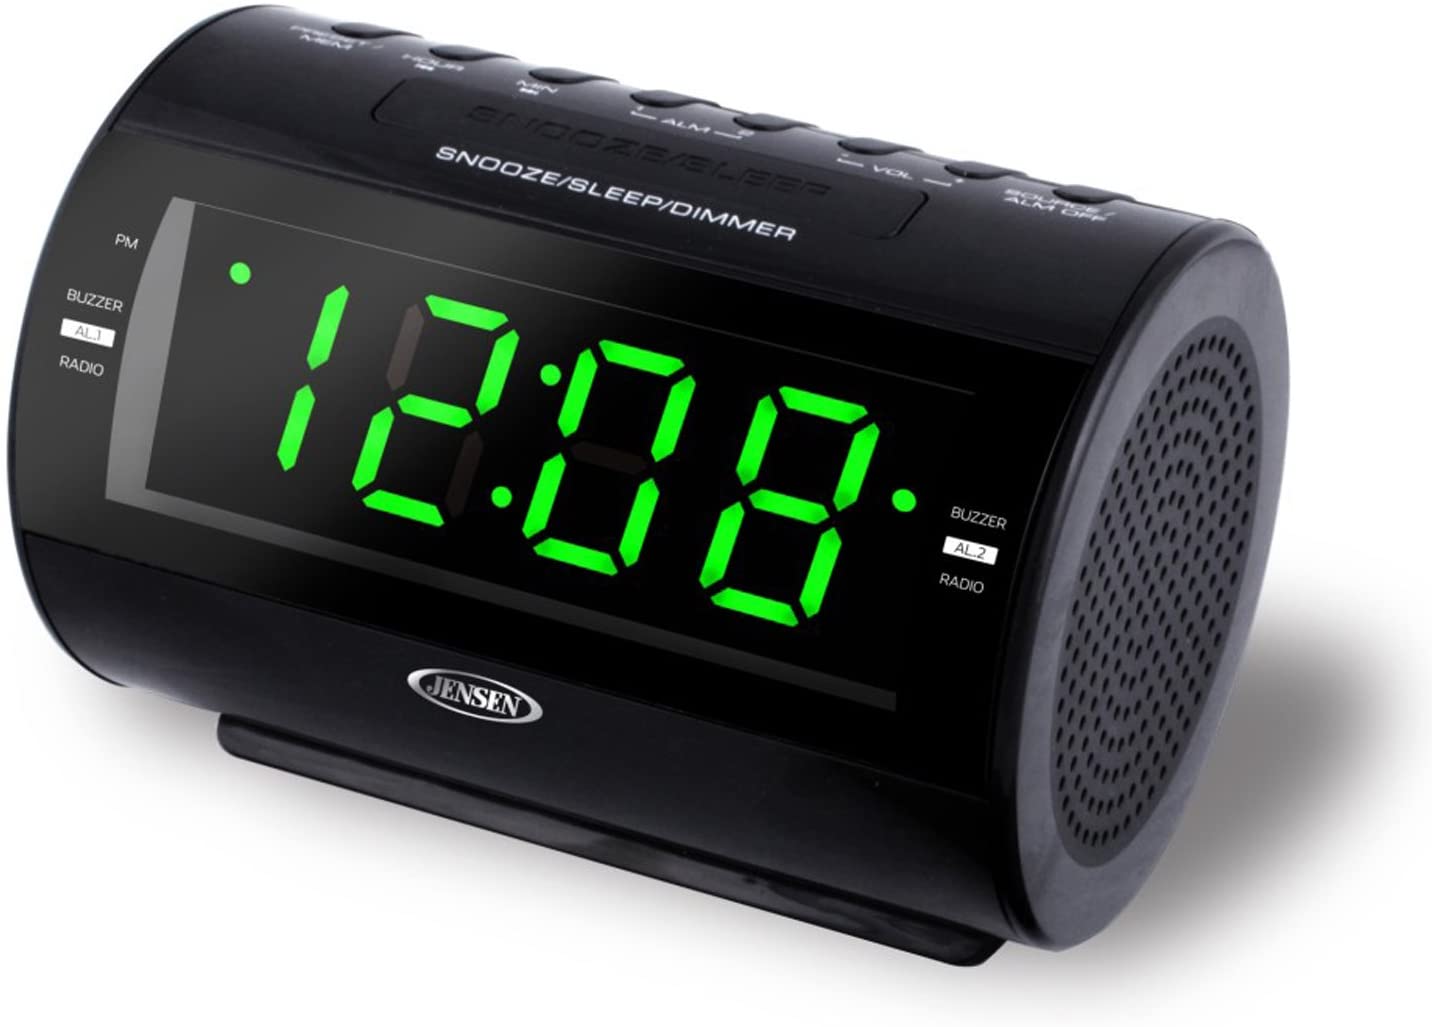 Jensen AM/FM digital clock radio